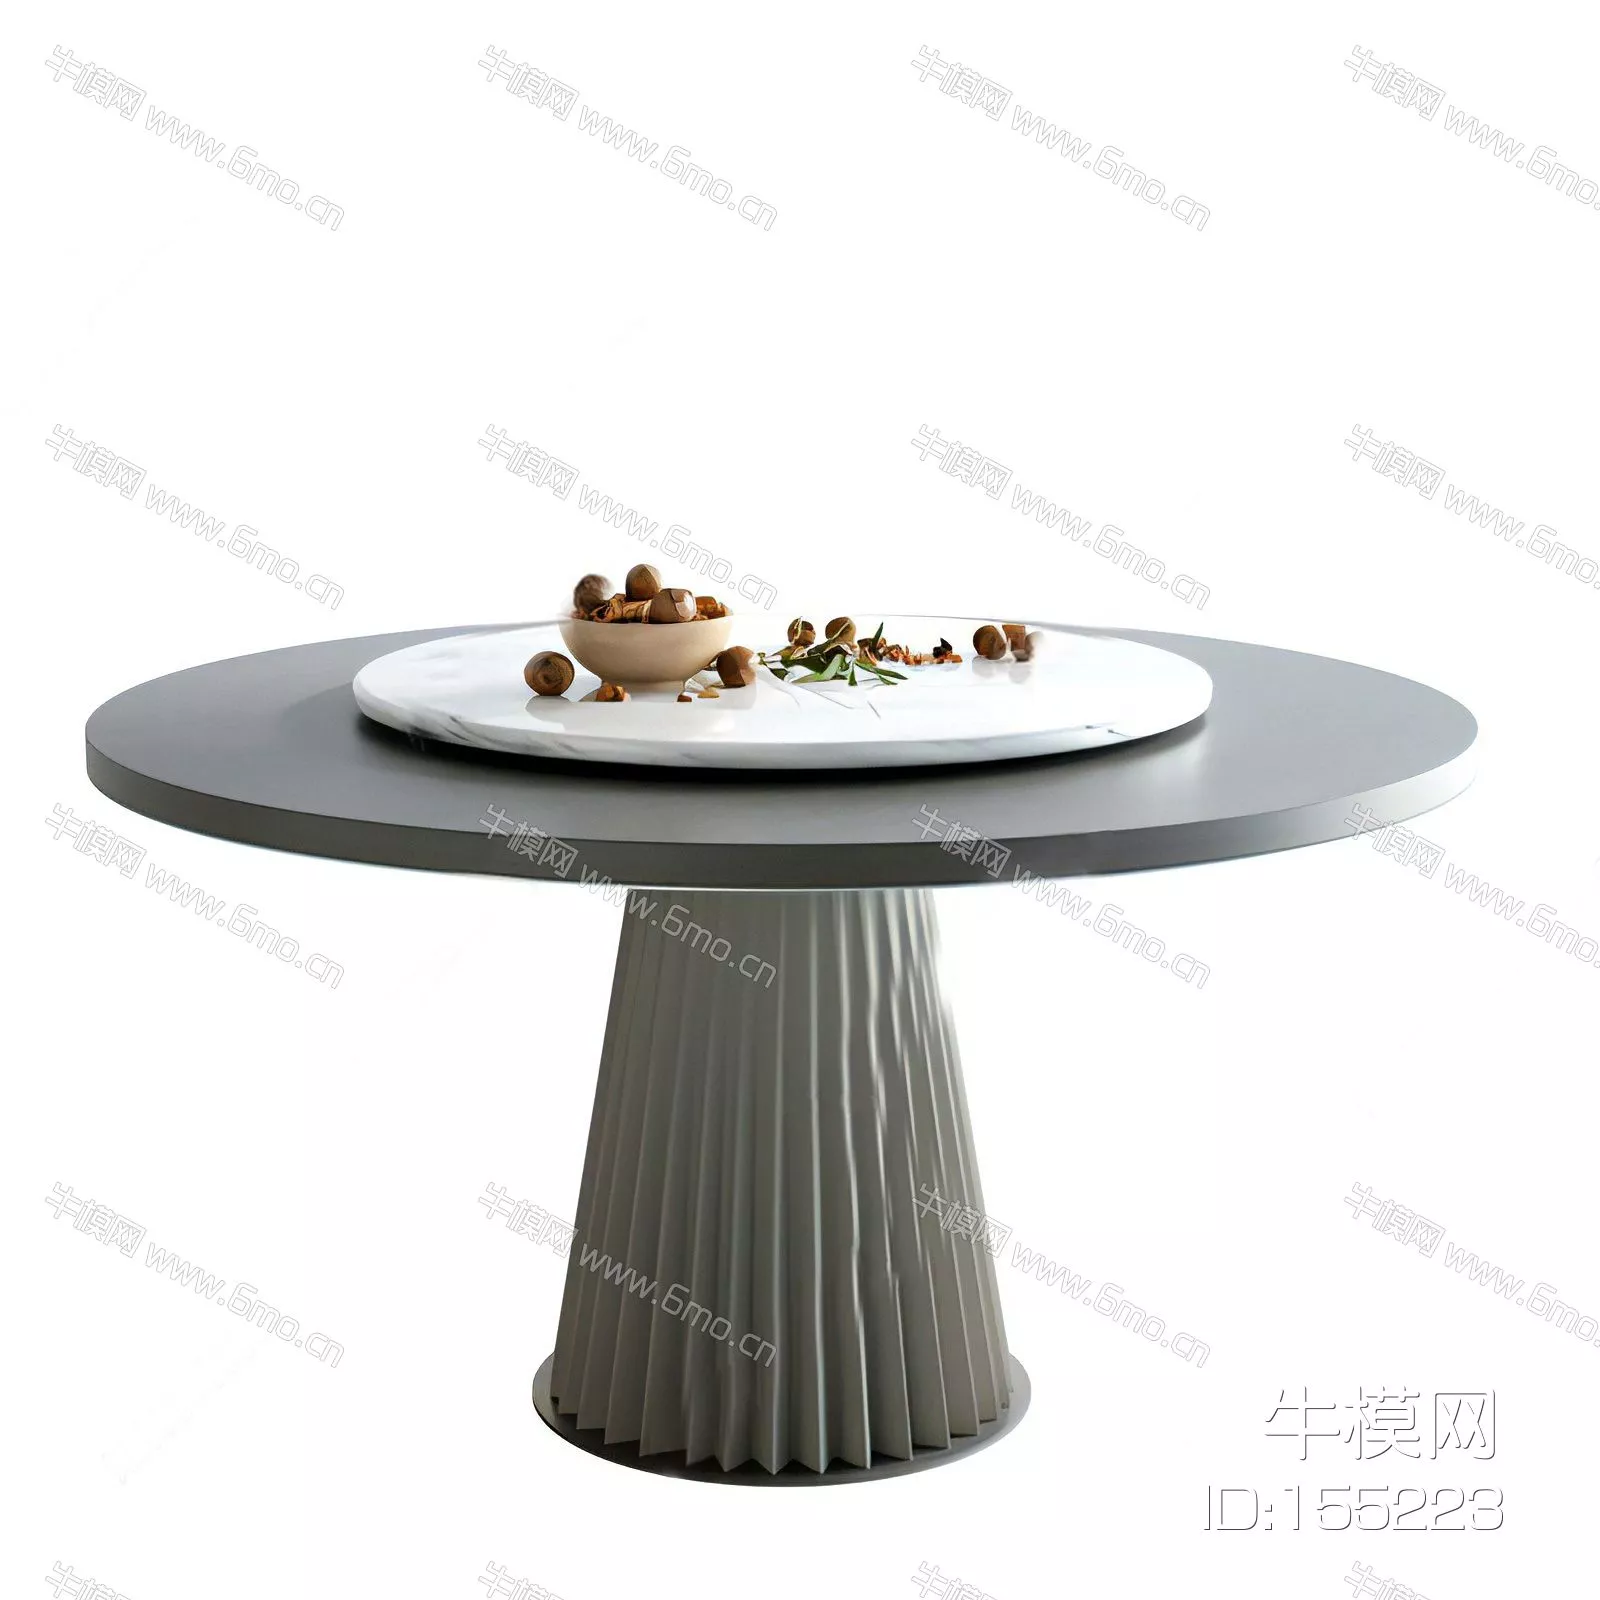 MODERN DINING TABLE SET - SKETCHUP 3D MODEL - VRAY - 155223